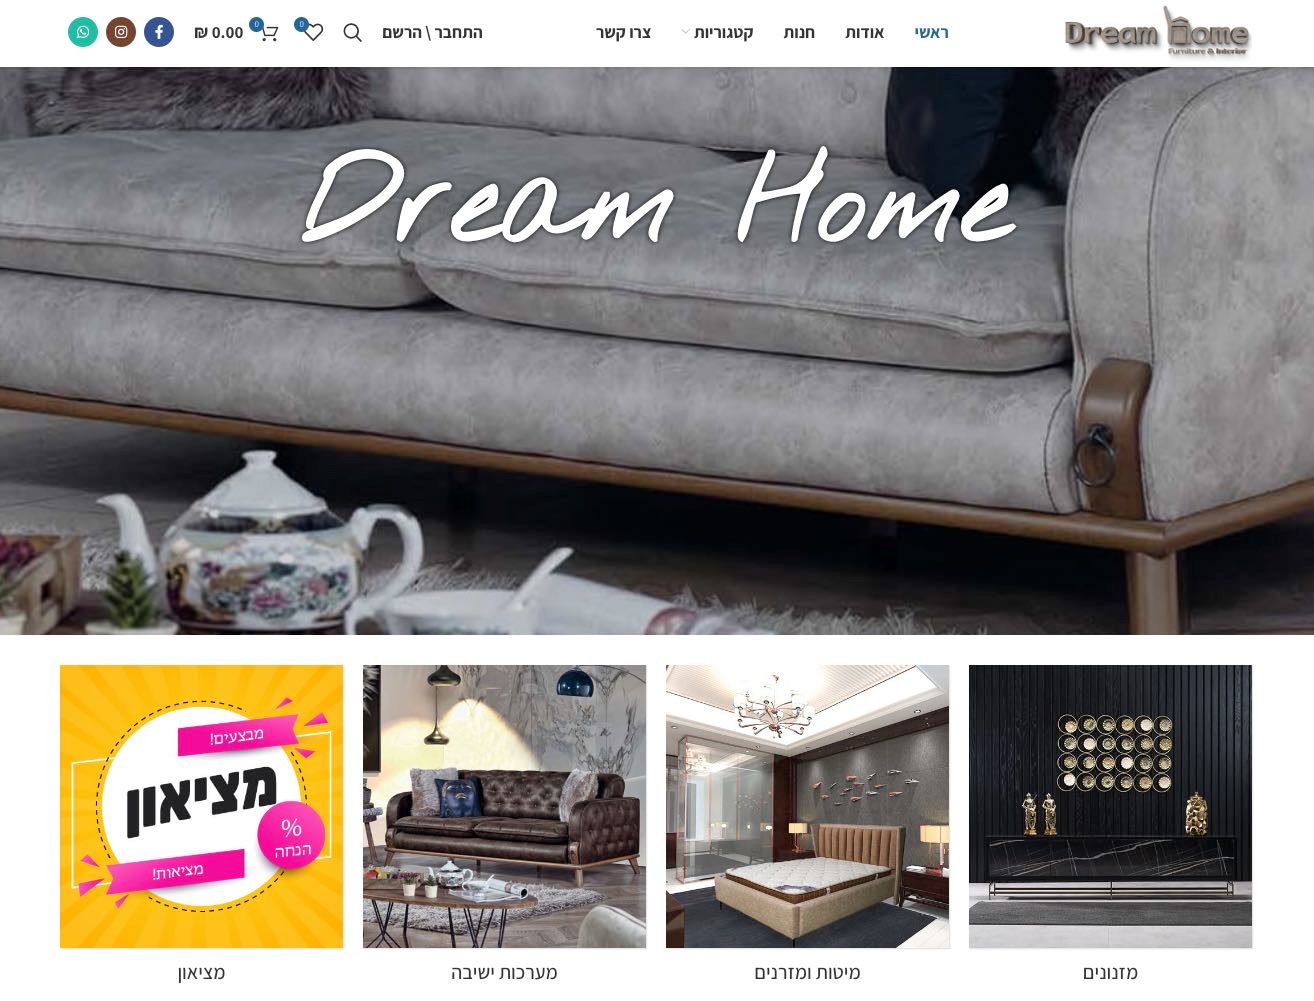 Dream Home Furniture Store Homepage